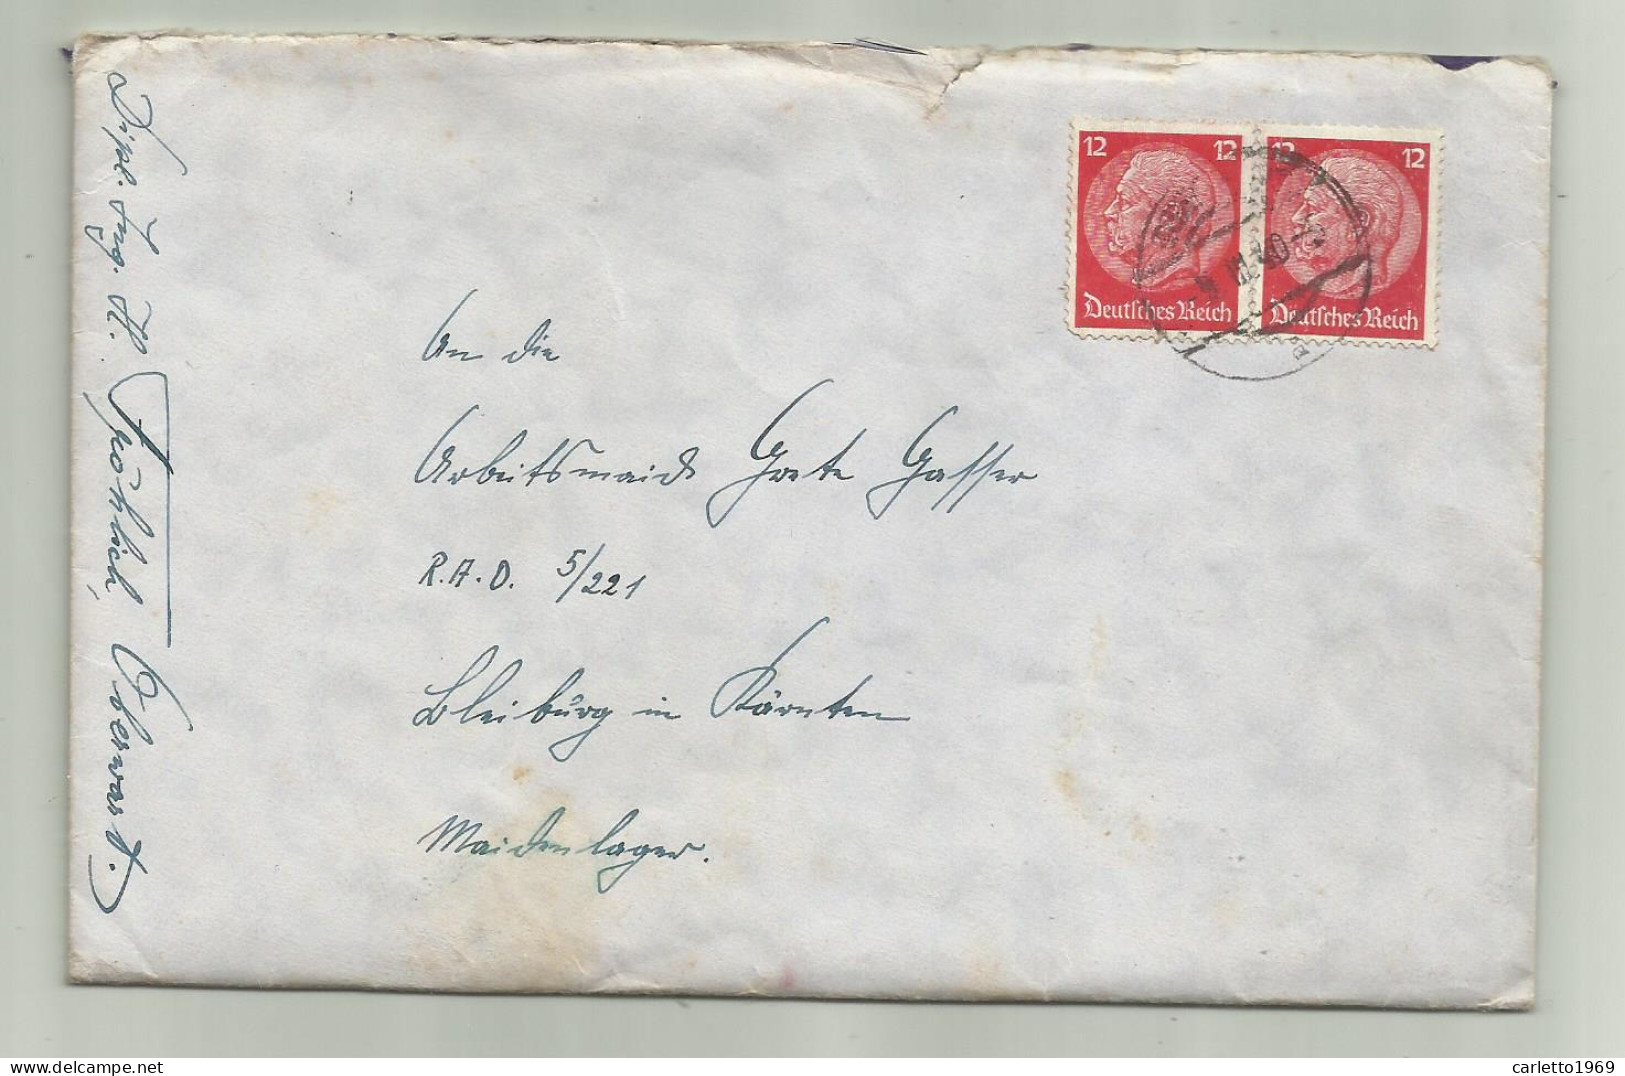 FELDPOST 1940 CON LETTERA ALL'INTERNO  - Used Stamps